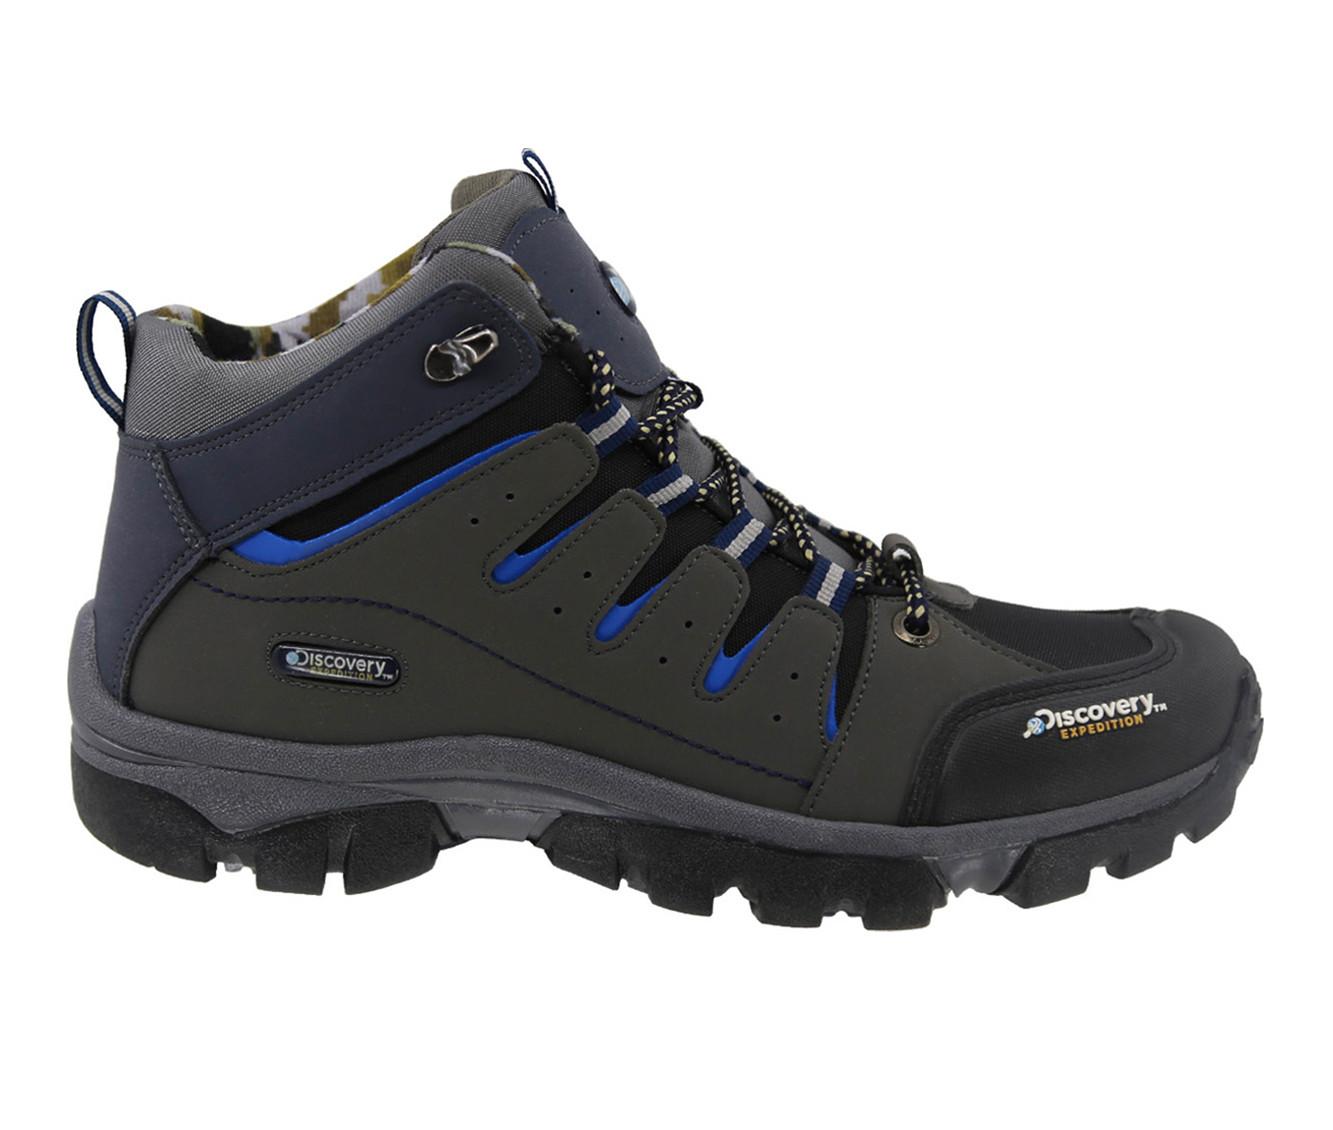 periodista Seleccione Ten cuidado Men's Discovery Expedition Blackwood Hiking Boots